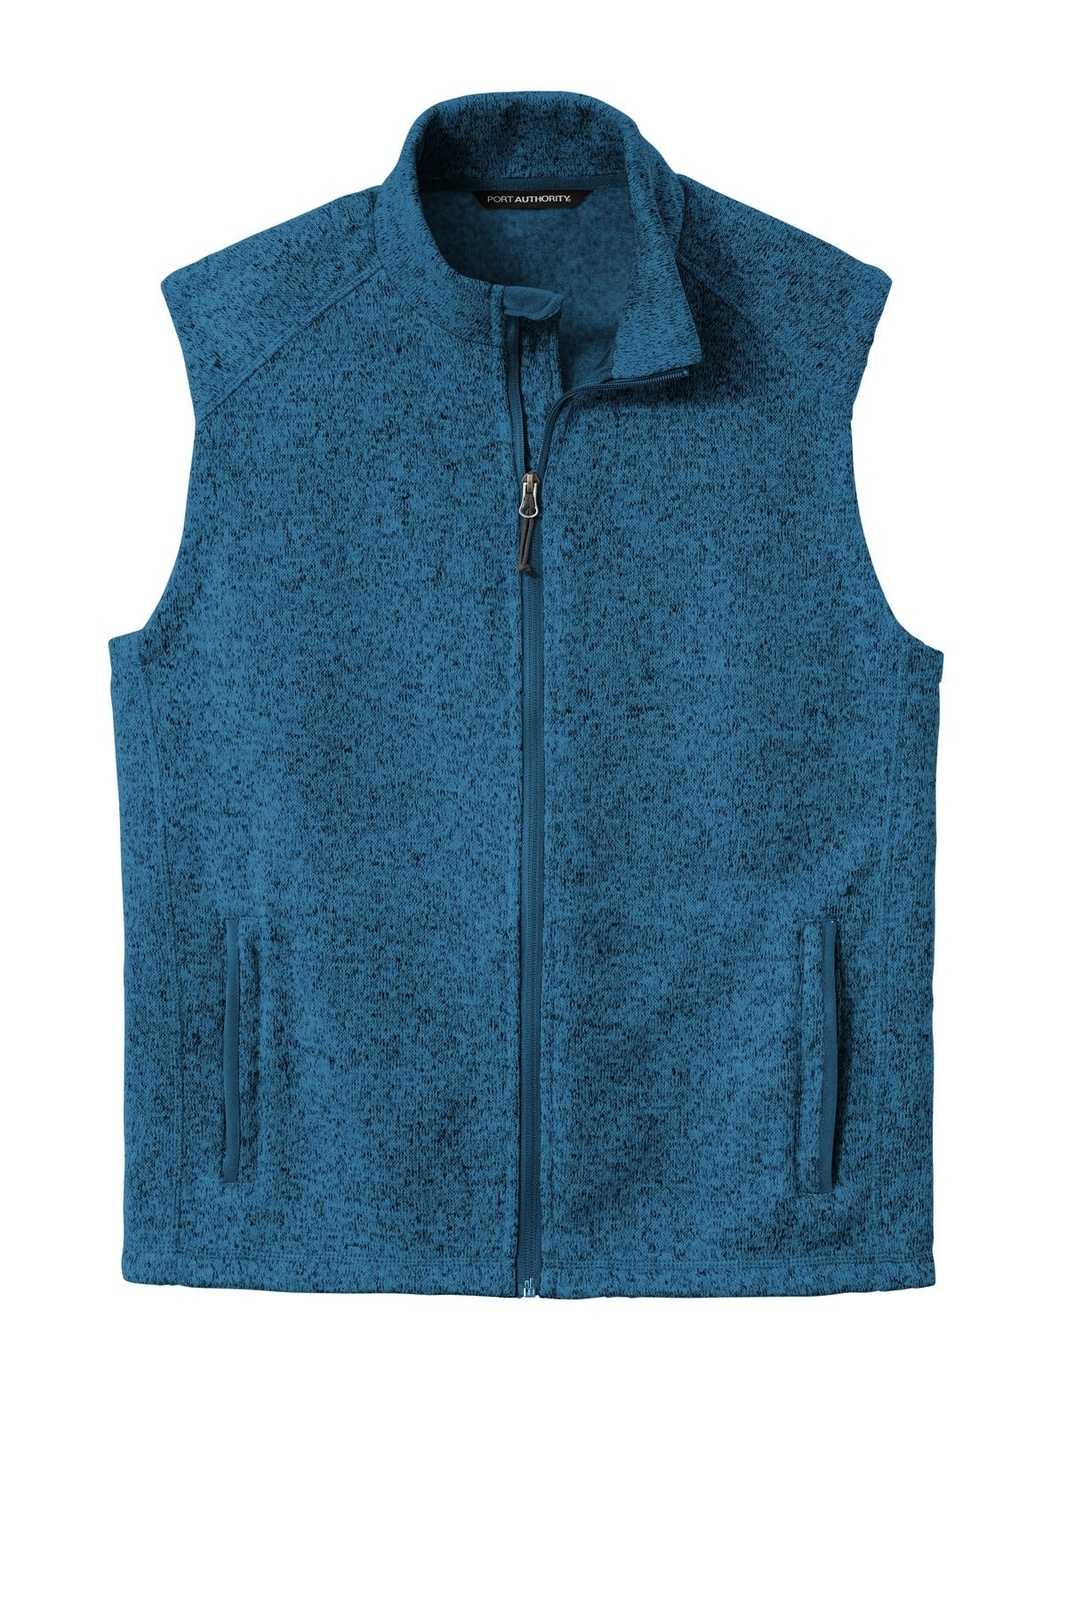 Port Authority F236 Sweater Fleece Vest - Medium Blue Heather - HIT a Double - 5